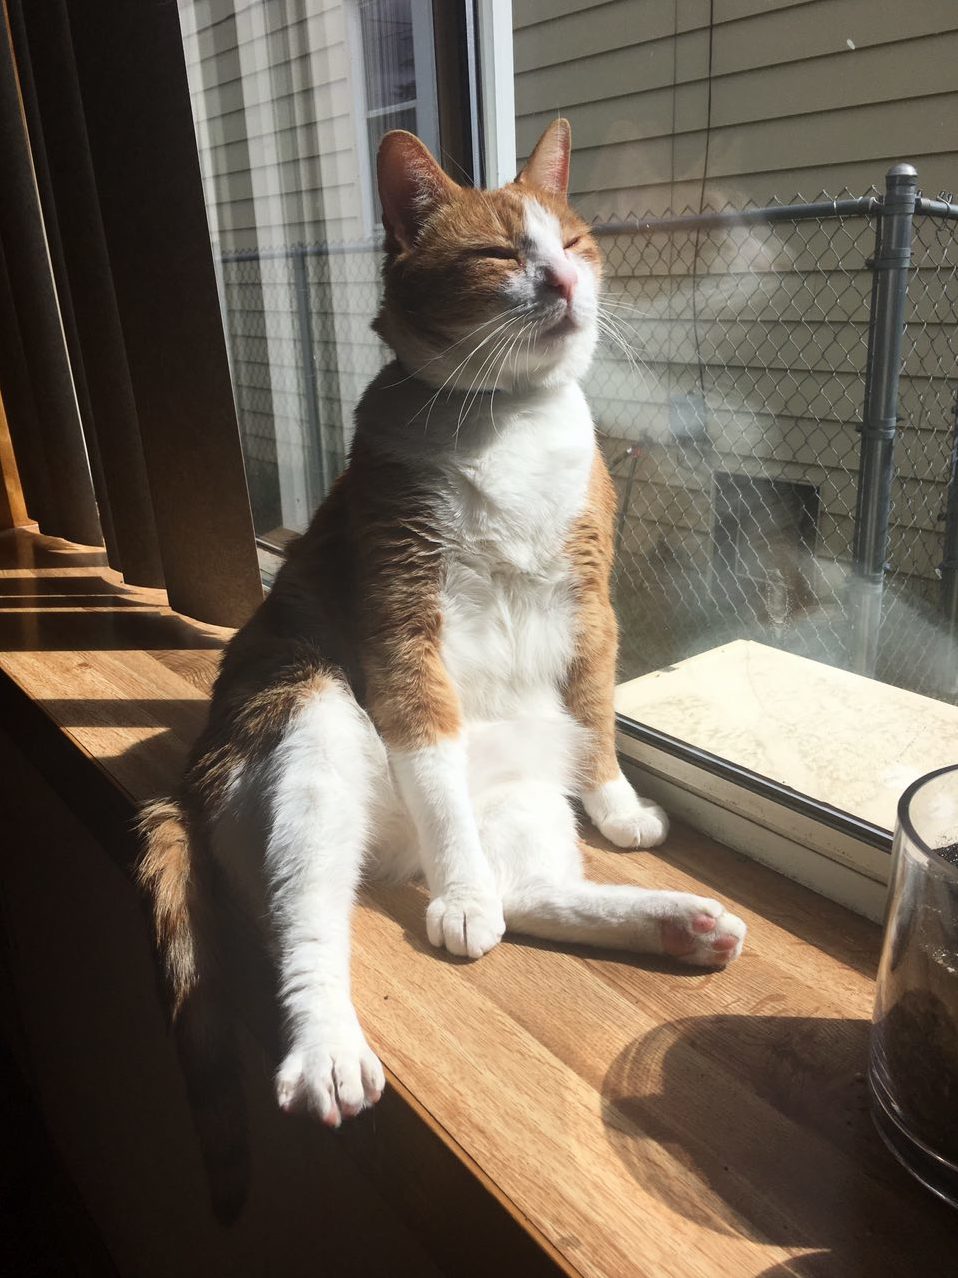 My buddy enjoying the sunshine.